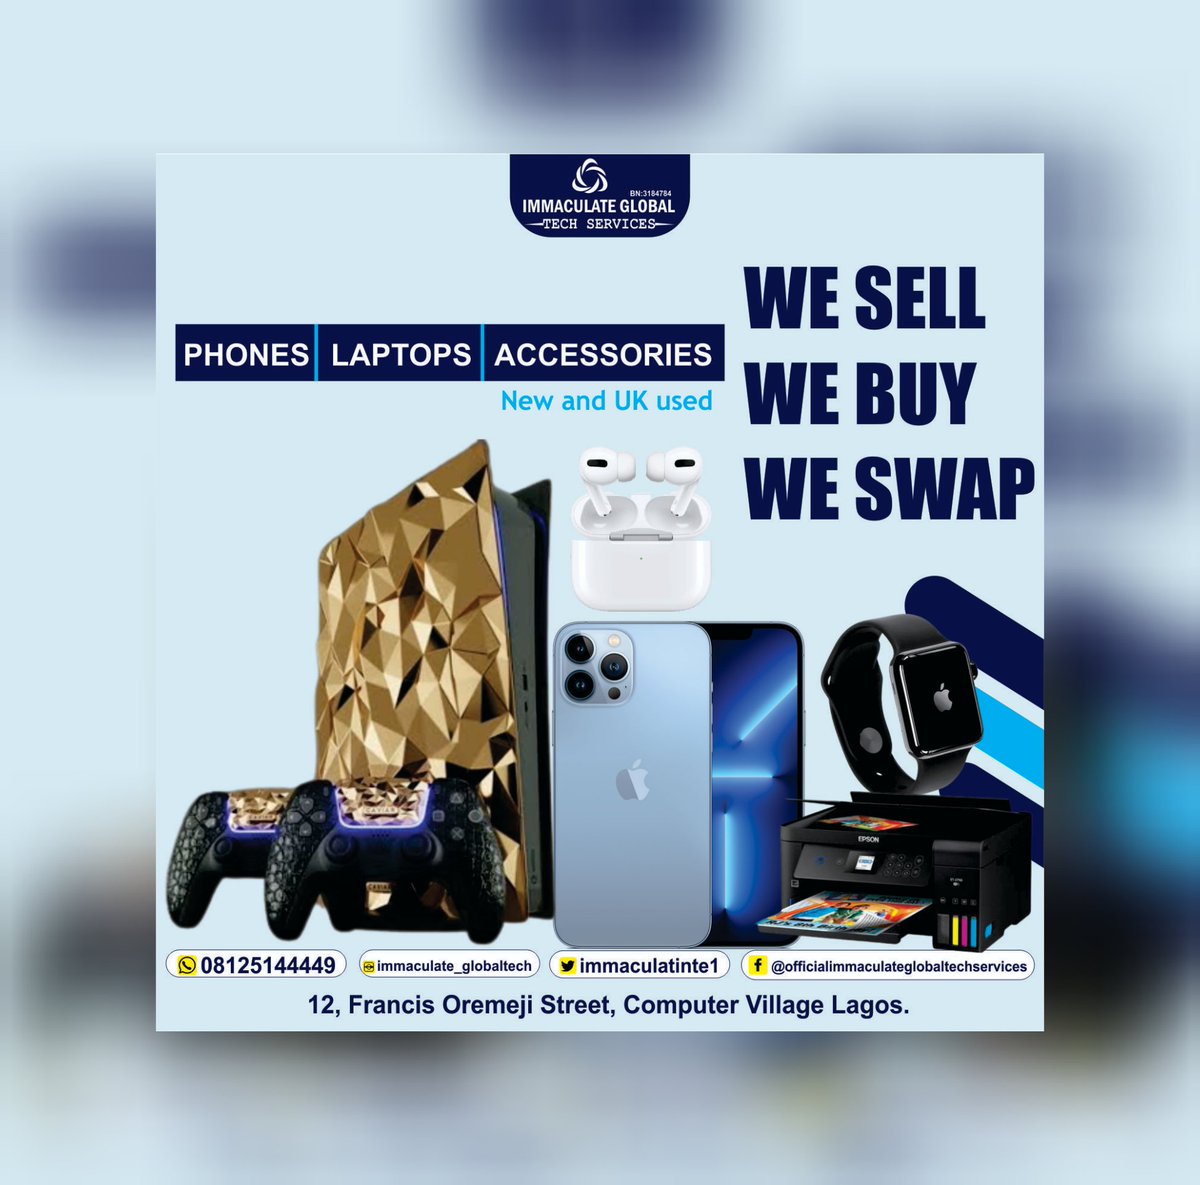 #mondayvibes #gadgetsforsale #ukusedlaptops #ukusedphones #hplaptop #DellLaptop #lagosnigeria #computervillageikeja #nationwidedelivery